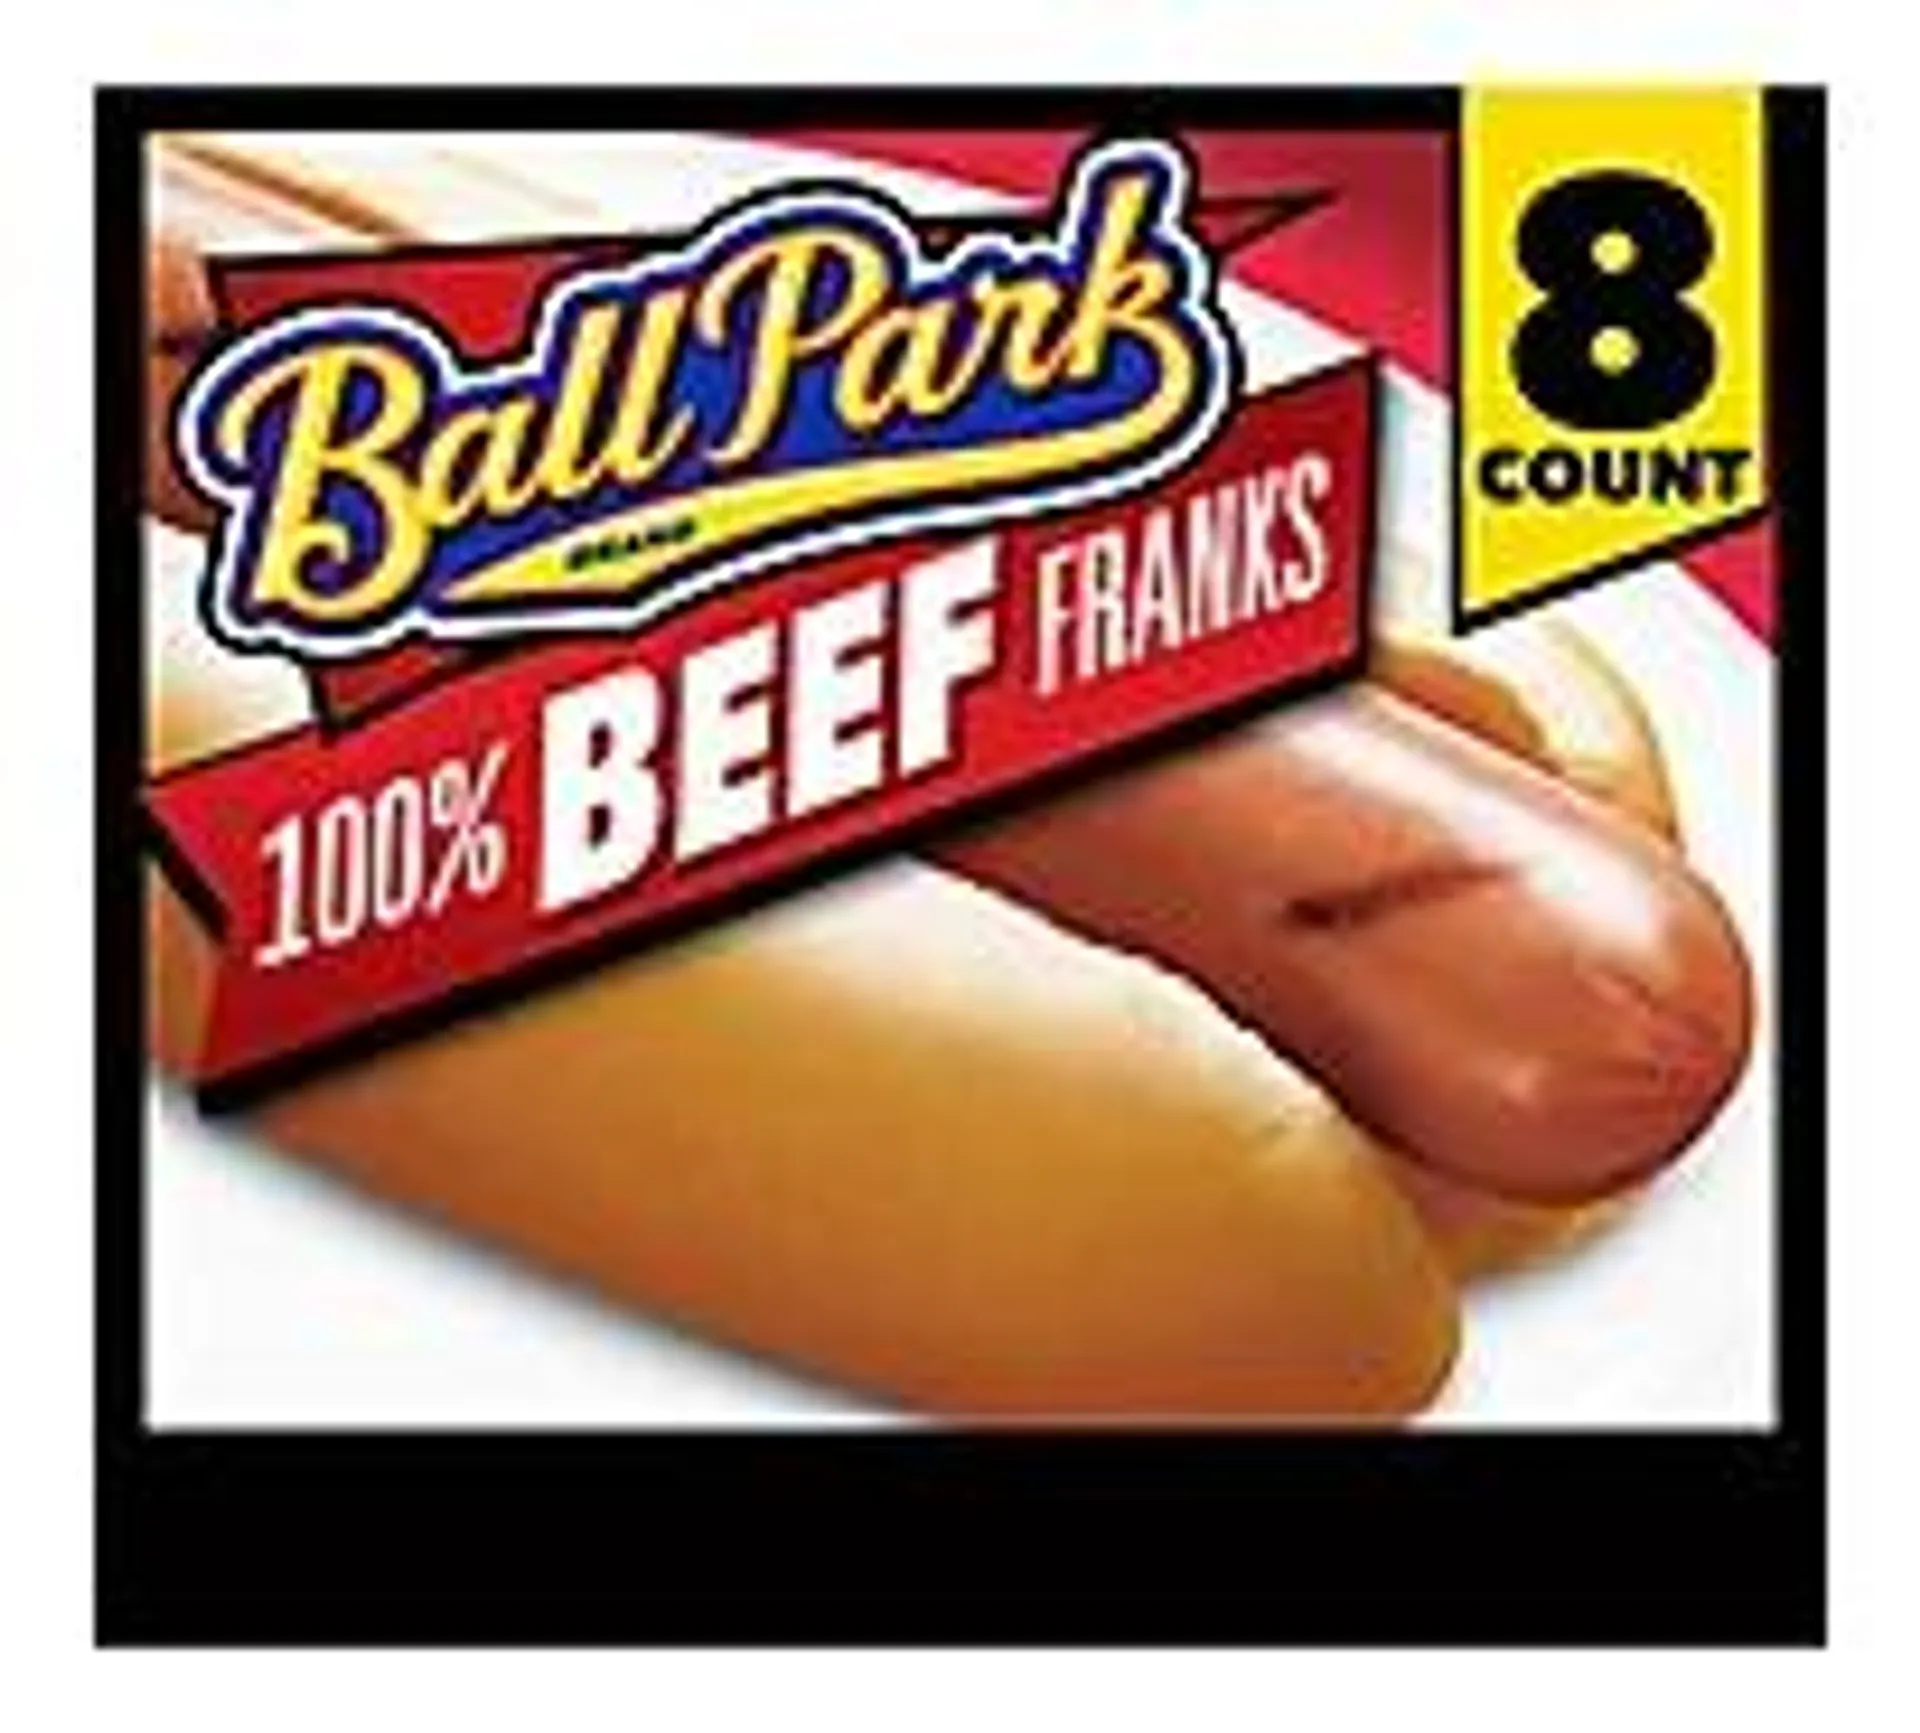 Ball Park Beef Hot Dogs Original Length - 8 Count